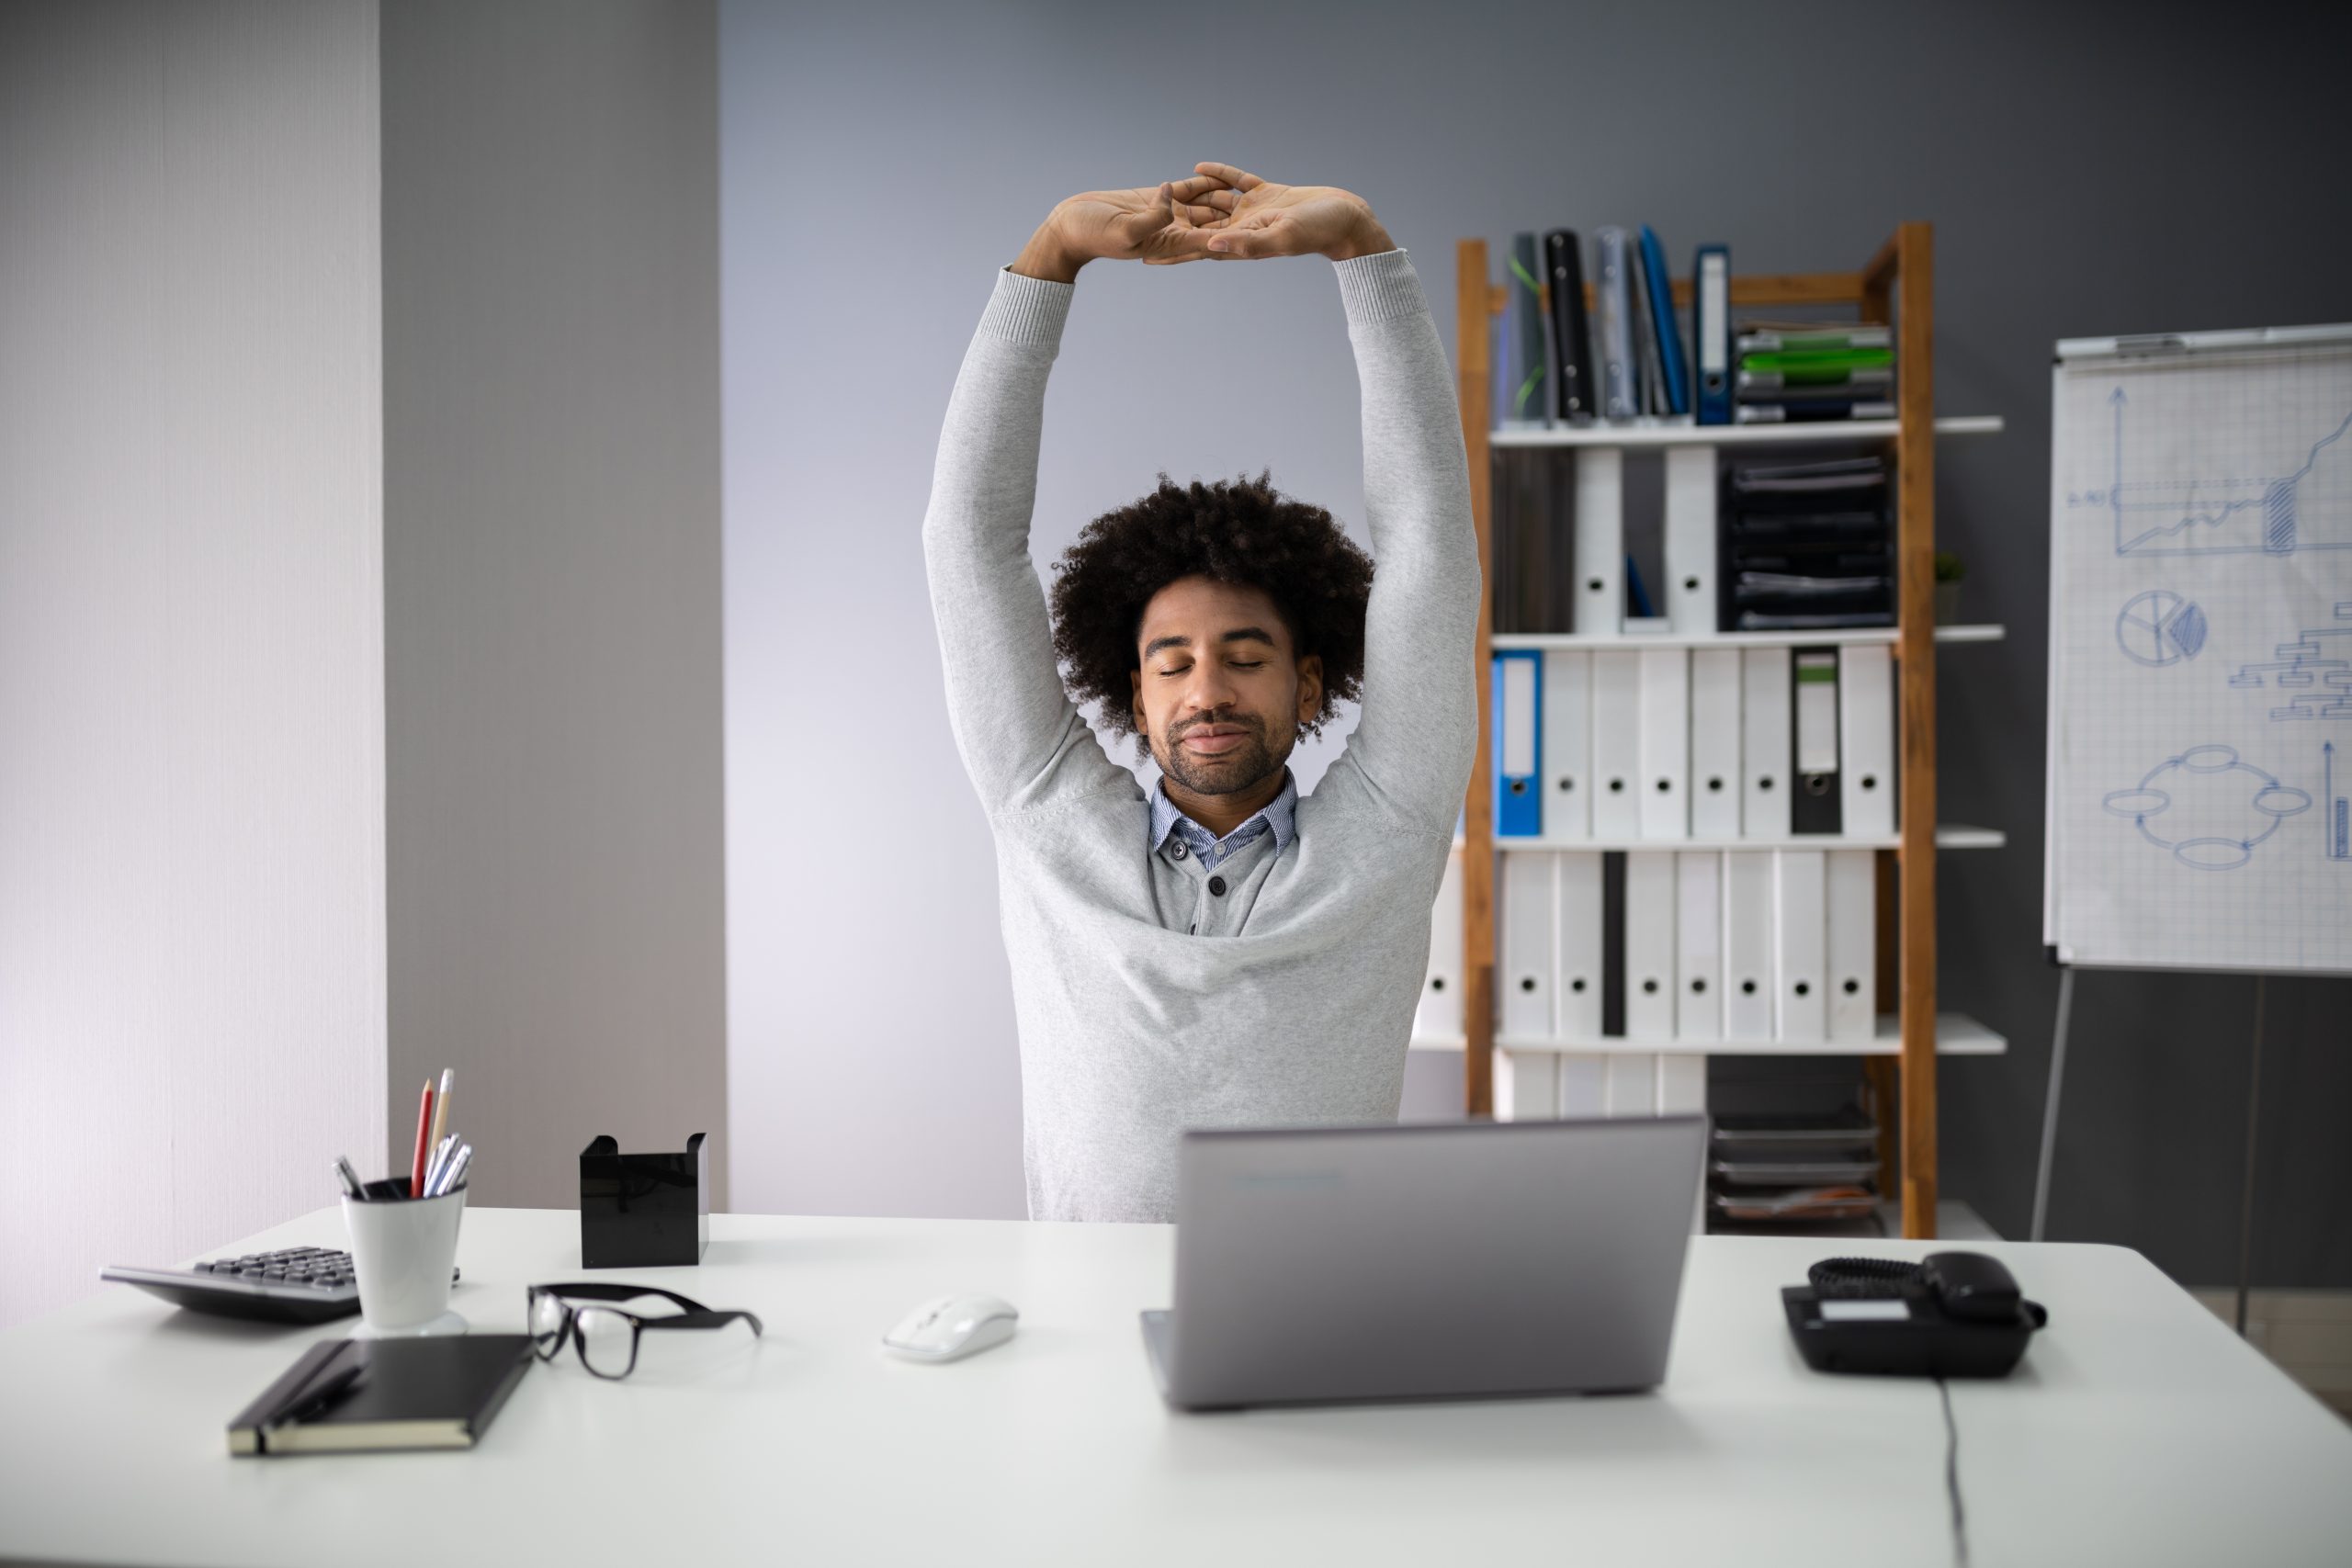 Man stretching at desk